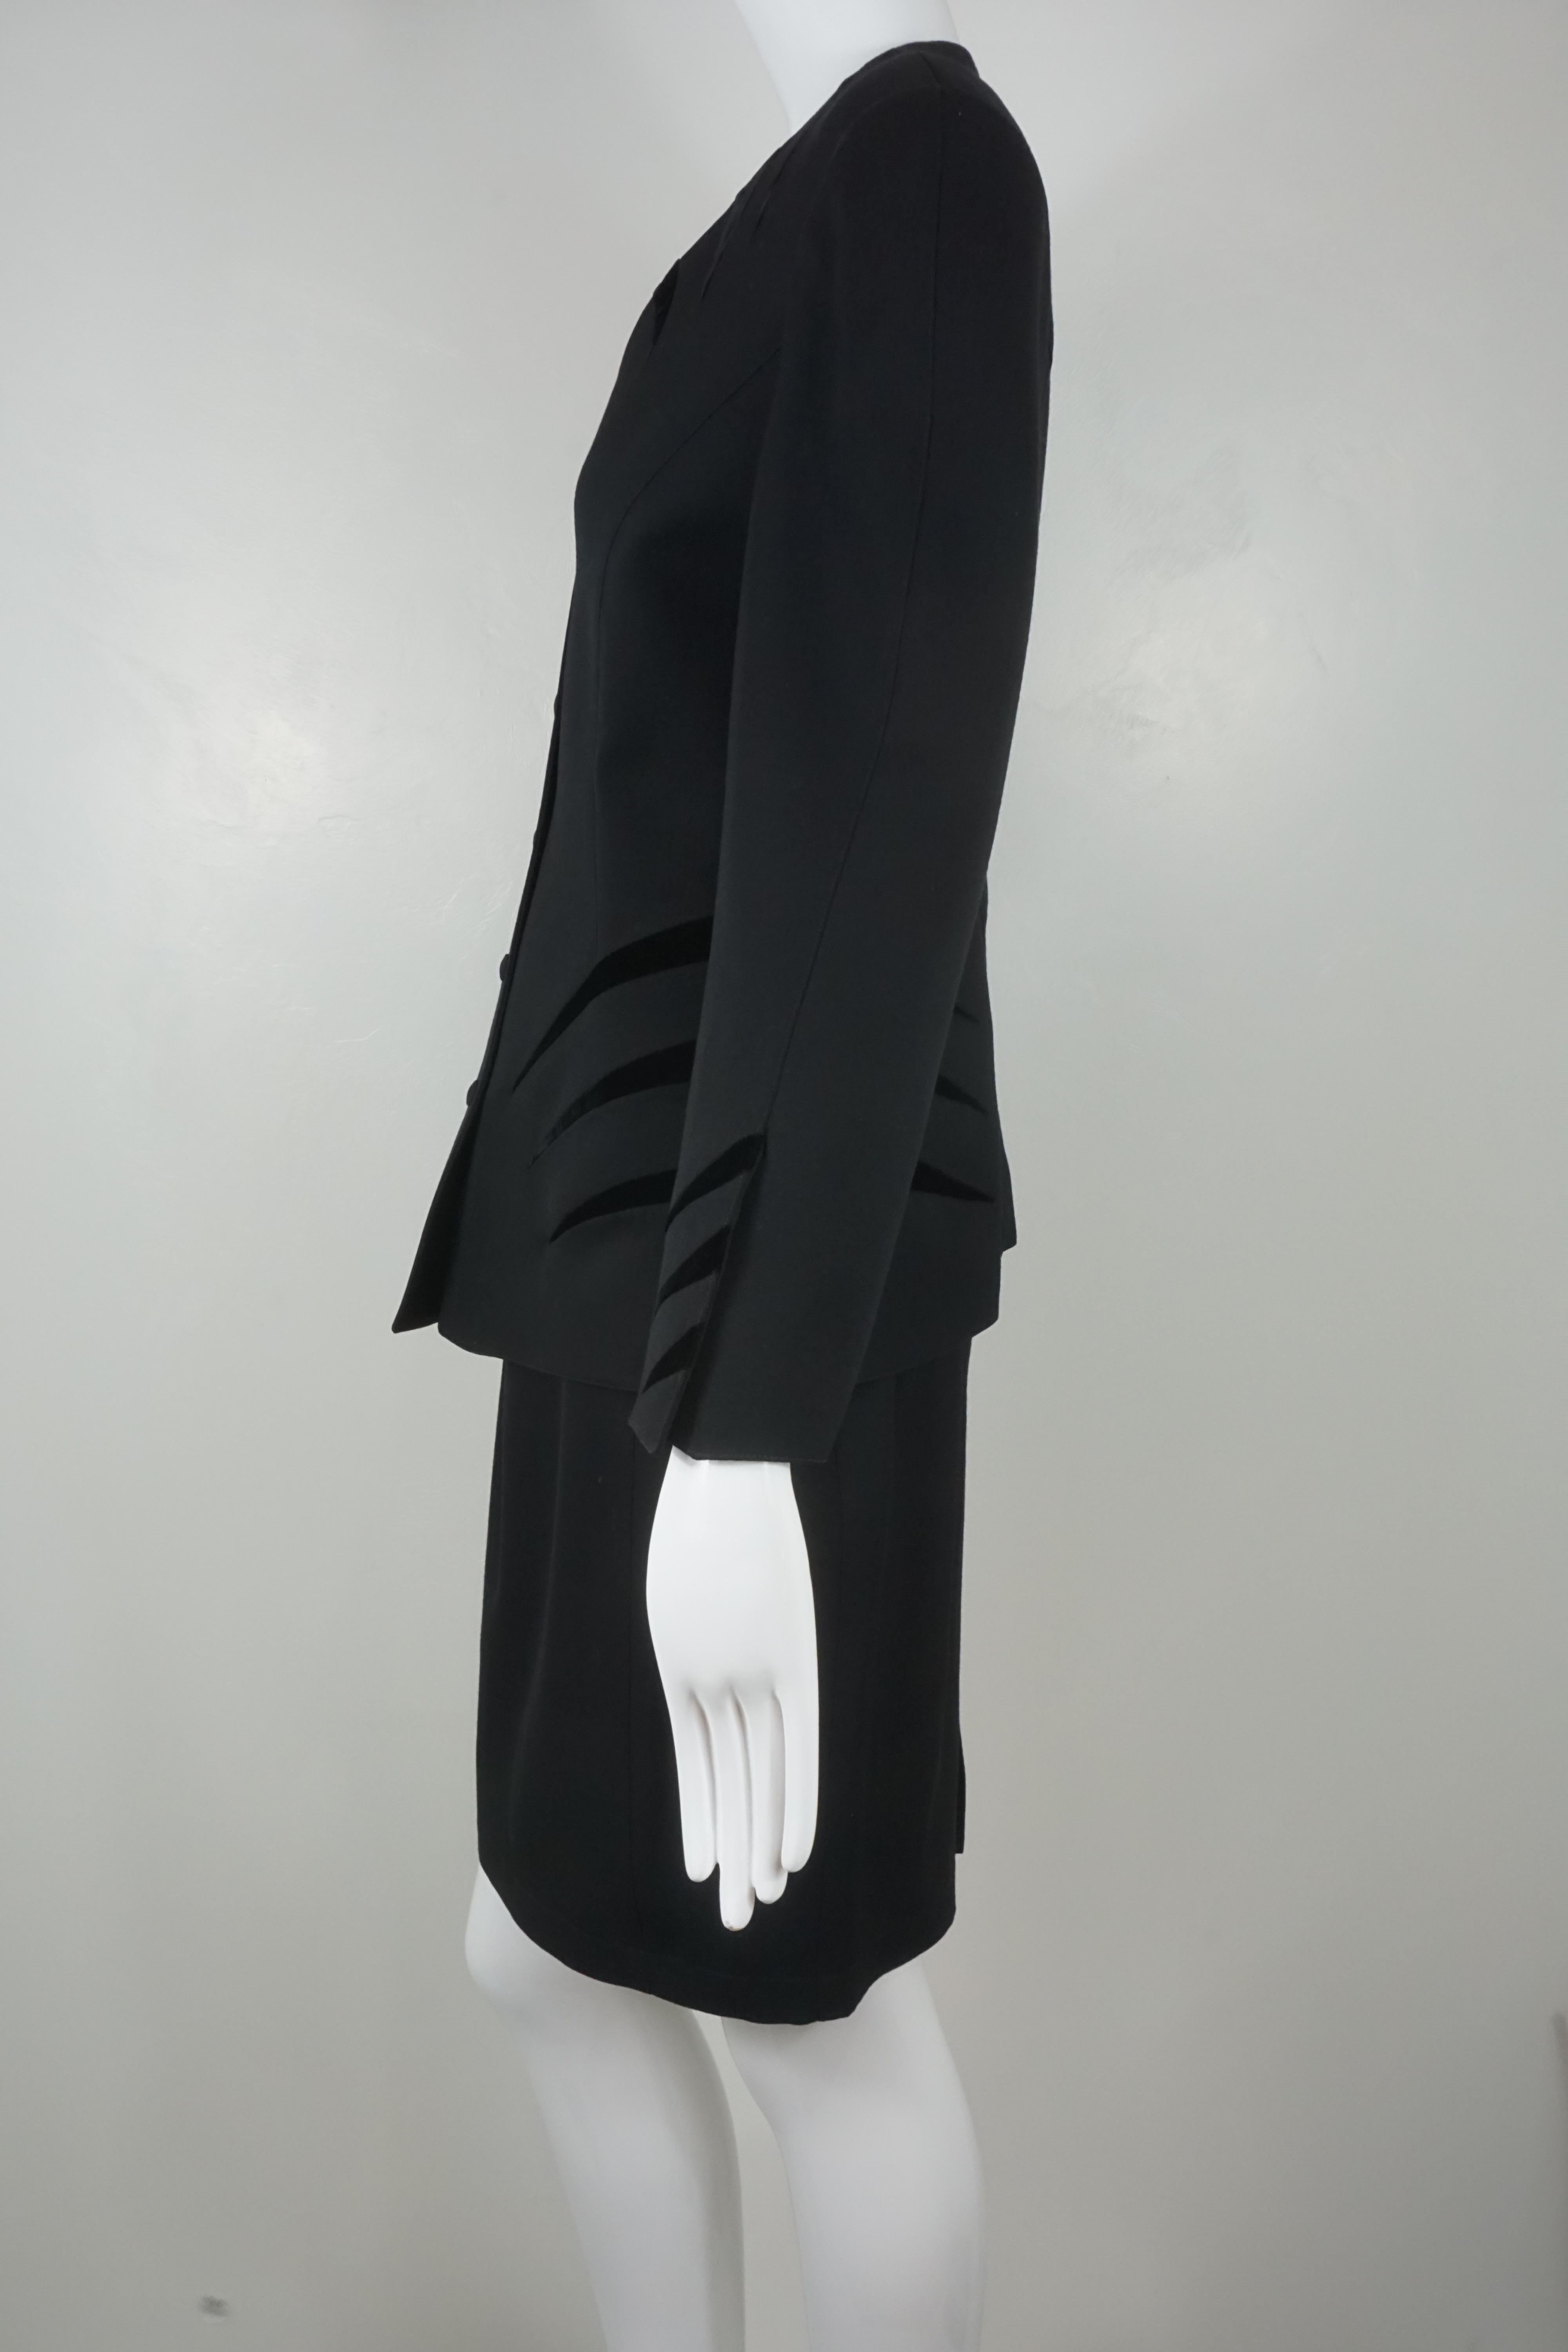 Women's or Men's Thierry Mugler Vintage Black 2pc Suit w/Jacket & Skirt 1990's